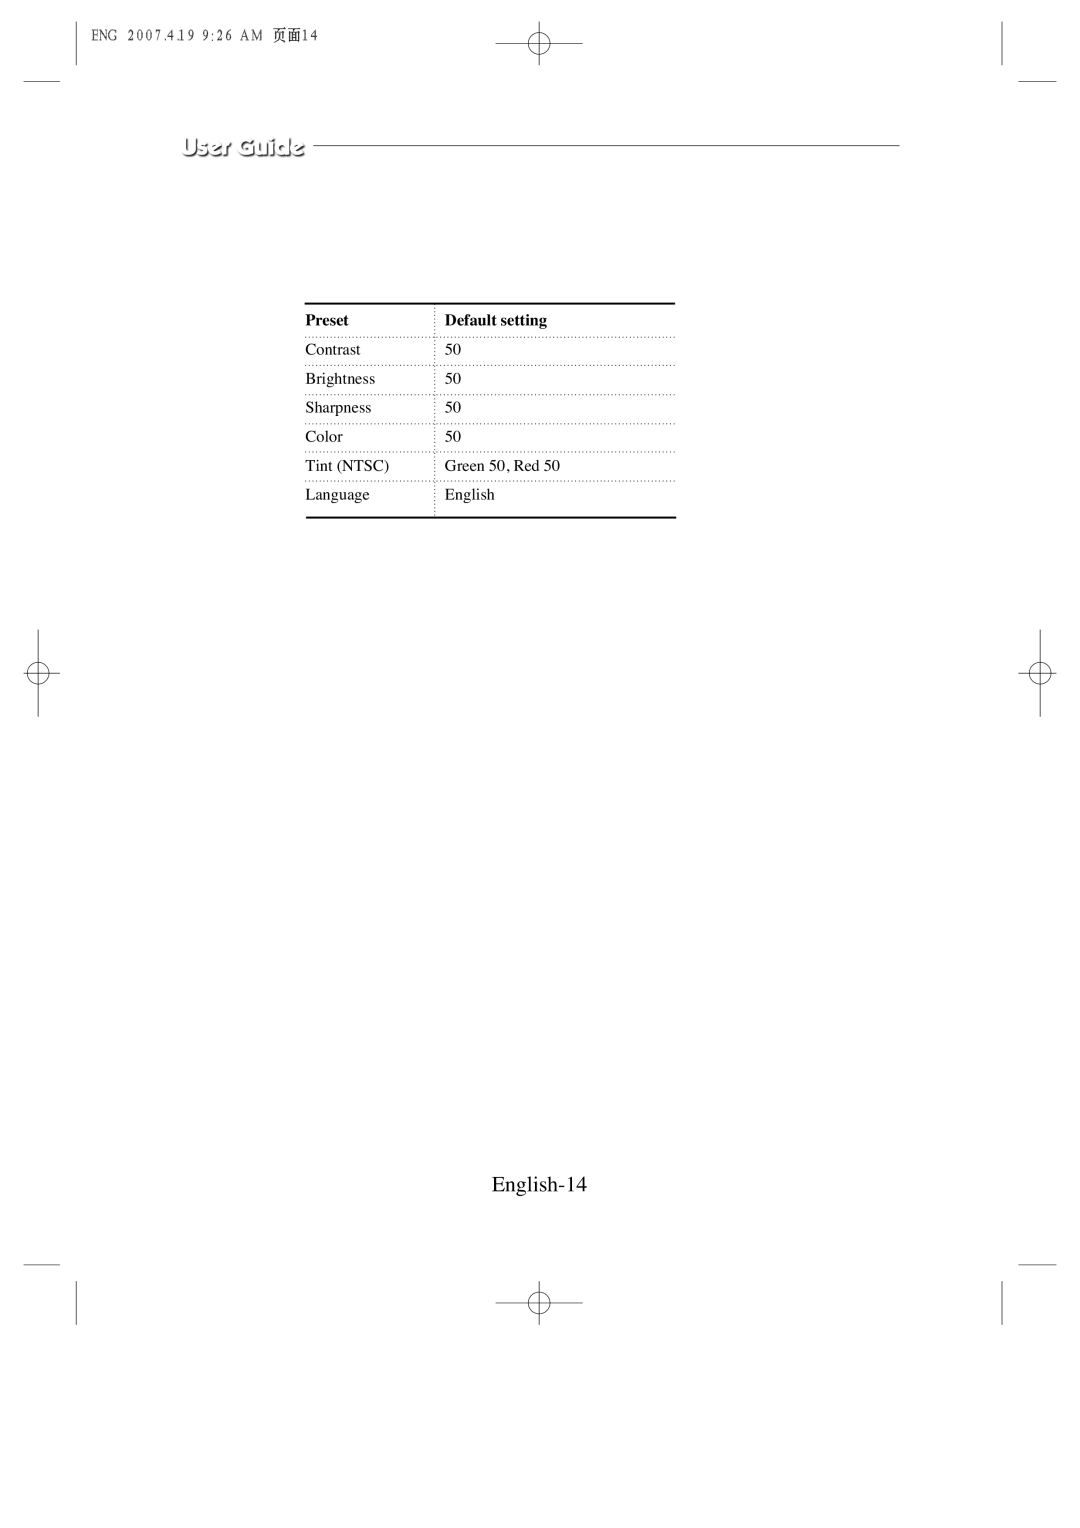 Samsung SMC-214 U, SMC-213 manual English-14, Preset, Default setting 